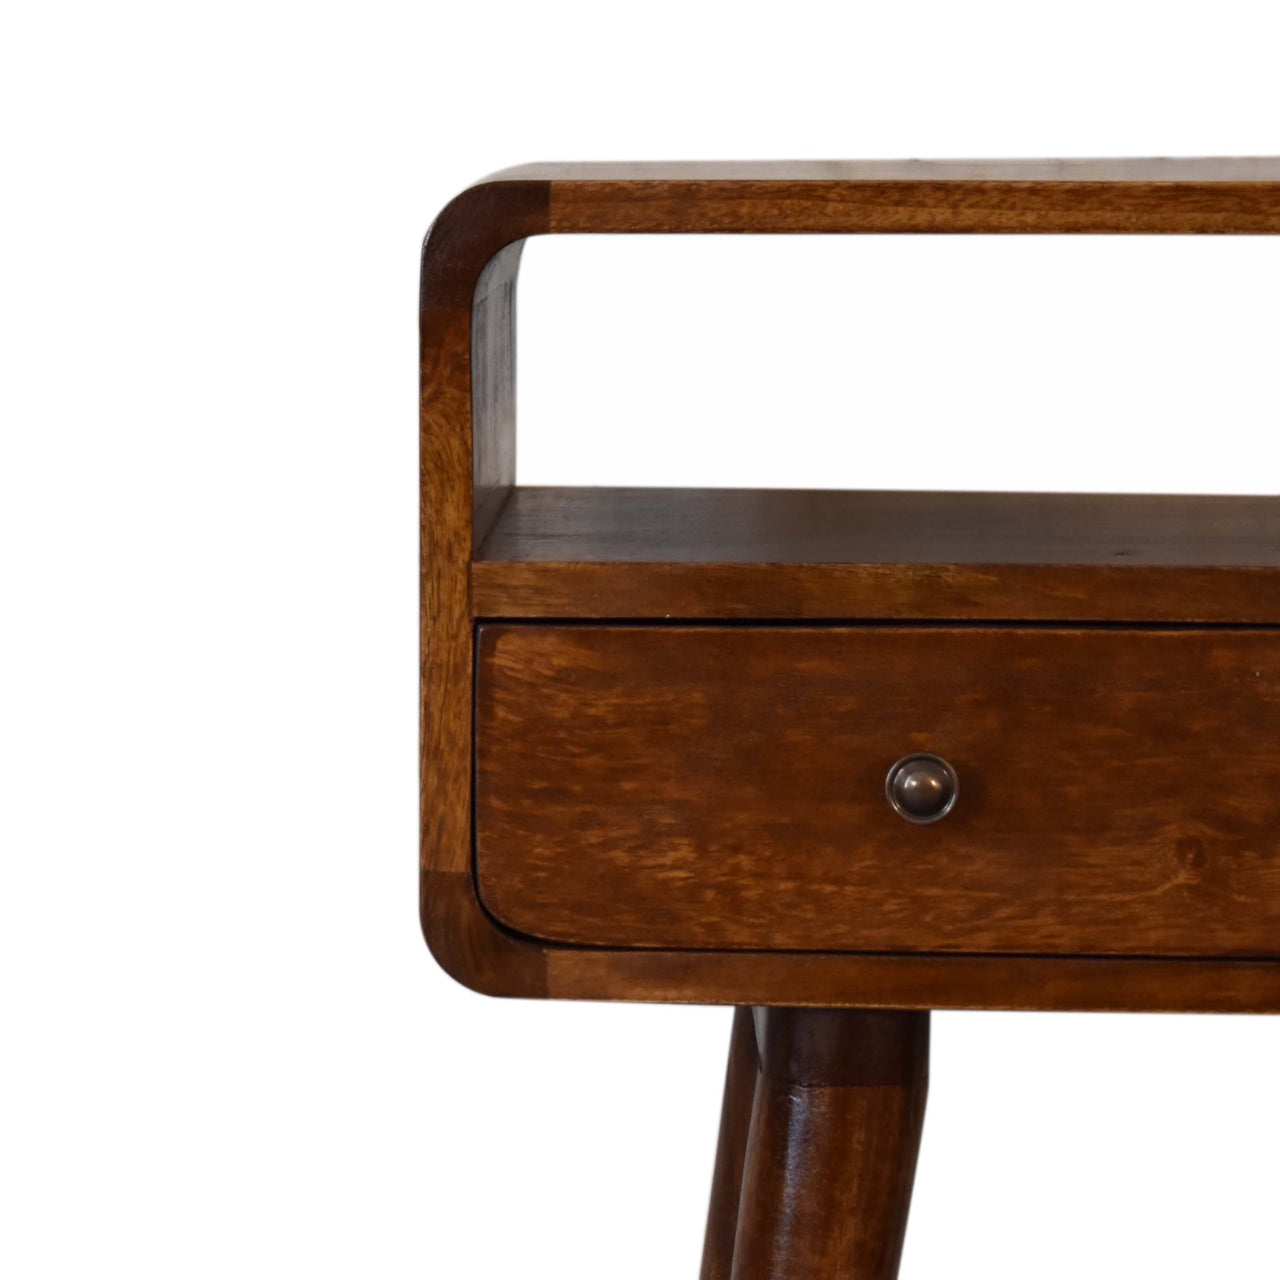 Century Handmade solid wood 2 drawer small console table in deep chestnut finish | malletandplane.com